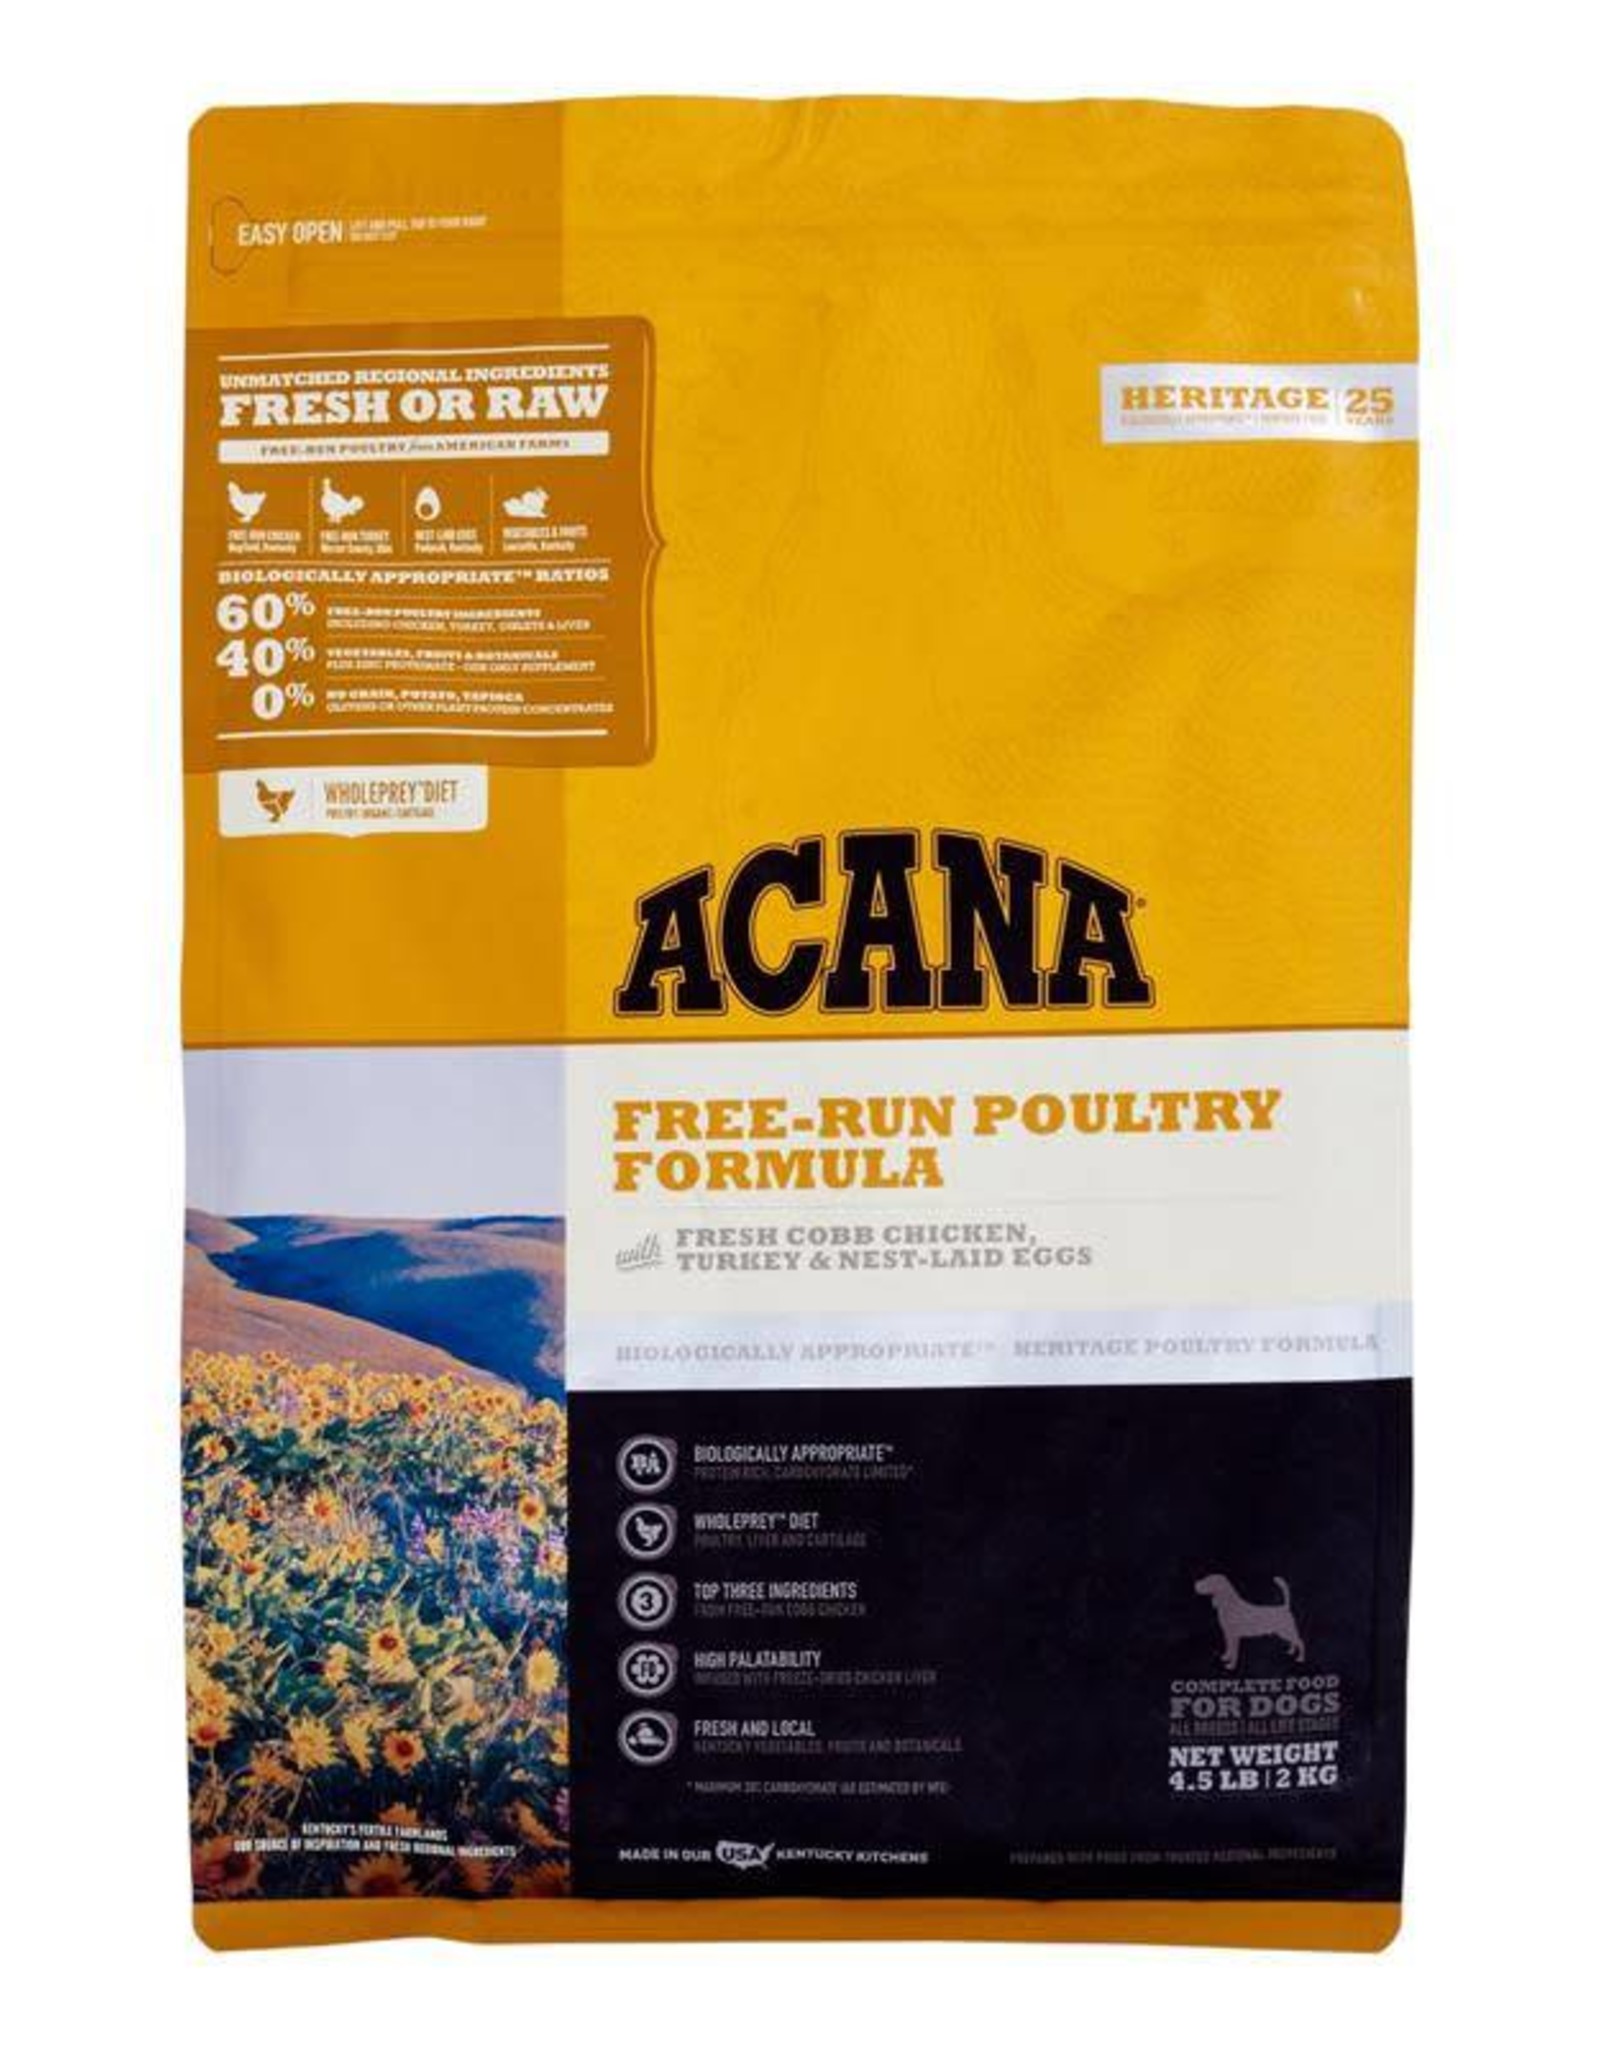 Acana Acana Heritage Grain-Free, Free-Run Poultry/ Fresh Cobb Chicken, Turkey & Nest-Laid Eggs Dry Dog Food